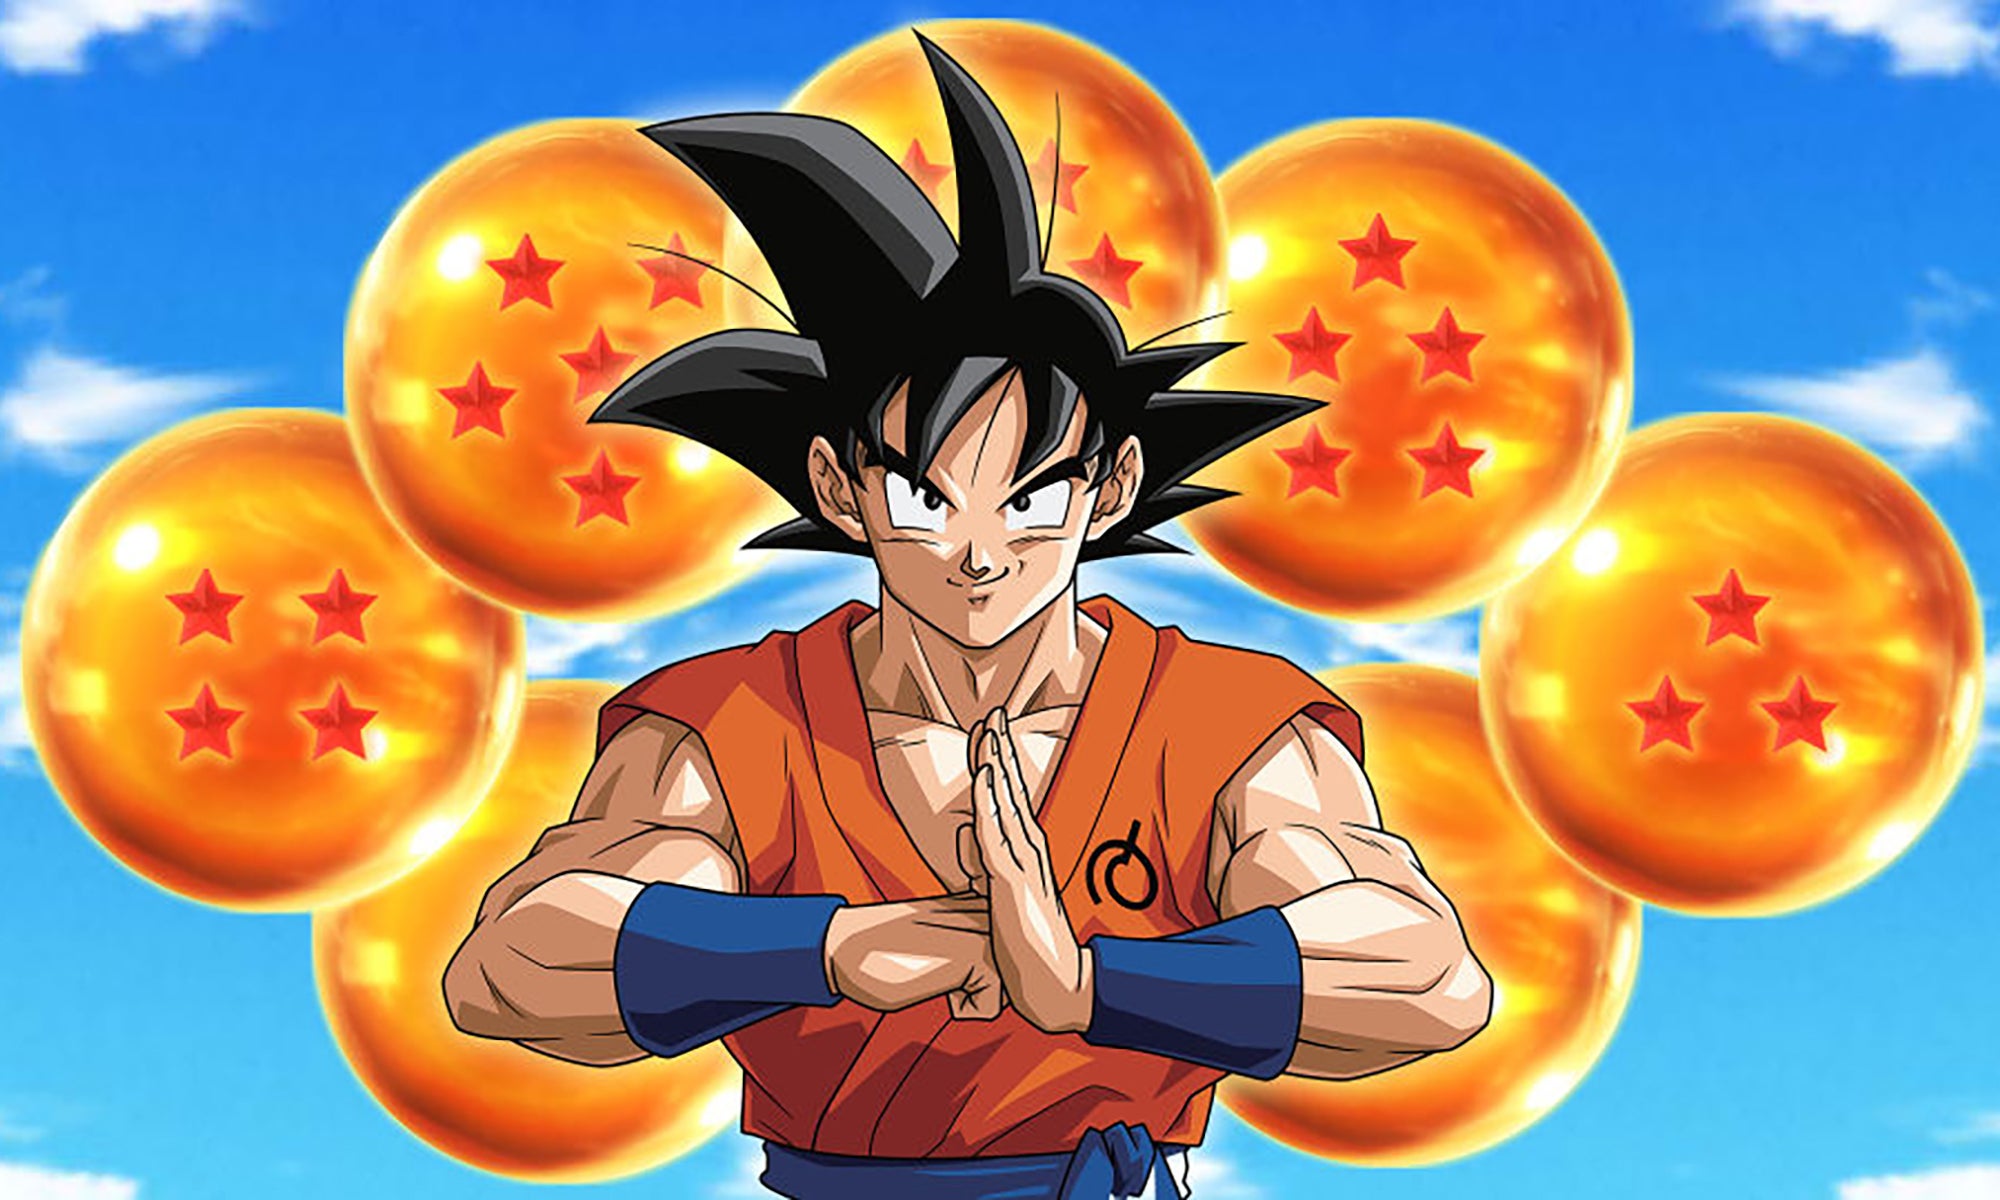 Buy MALKIN Dragon Ball Z Action Figures  18 Cm  Anime Action Figures   Goku Toy  Goku Action Figures  Anime Figure  Dragon Ball Super Toys   Anime Merchandise